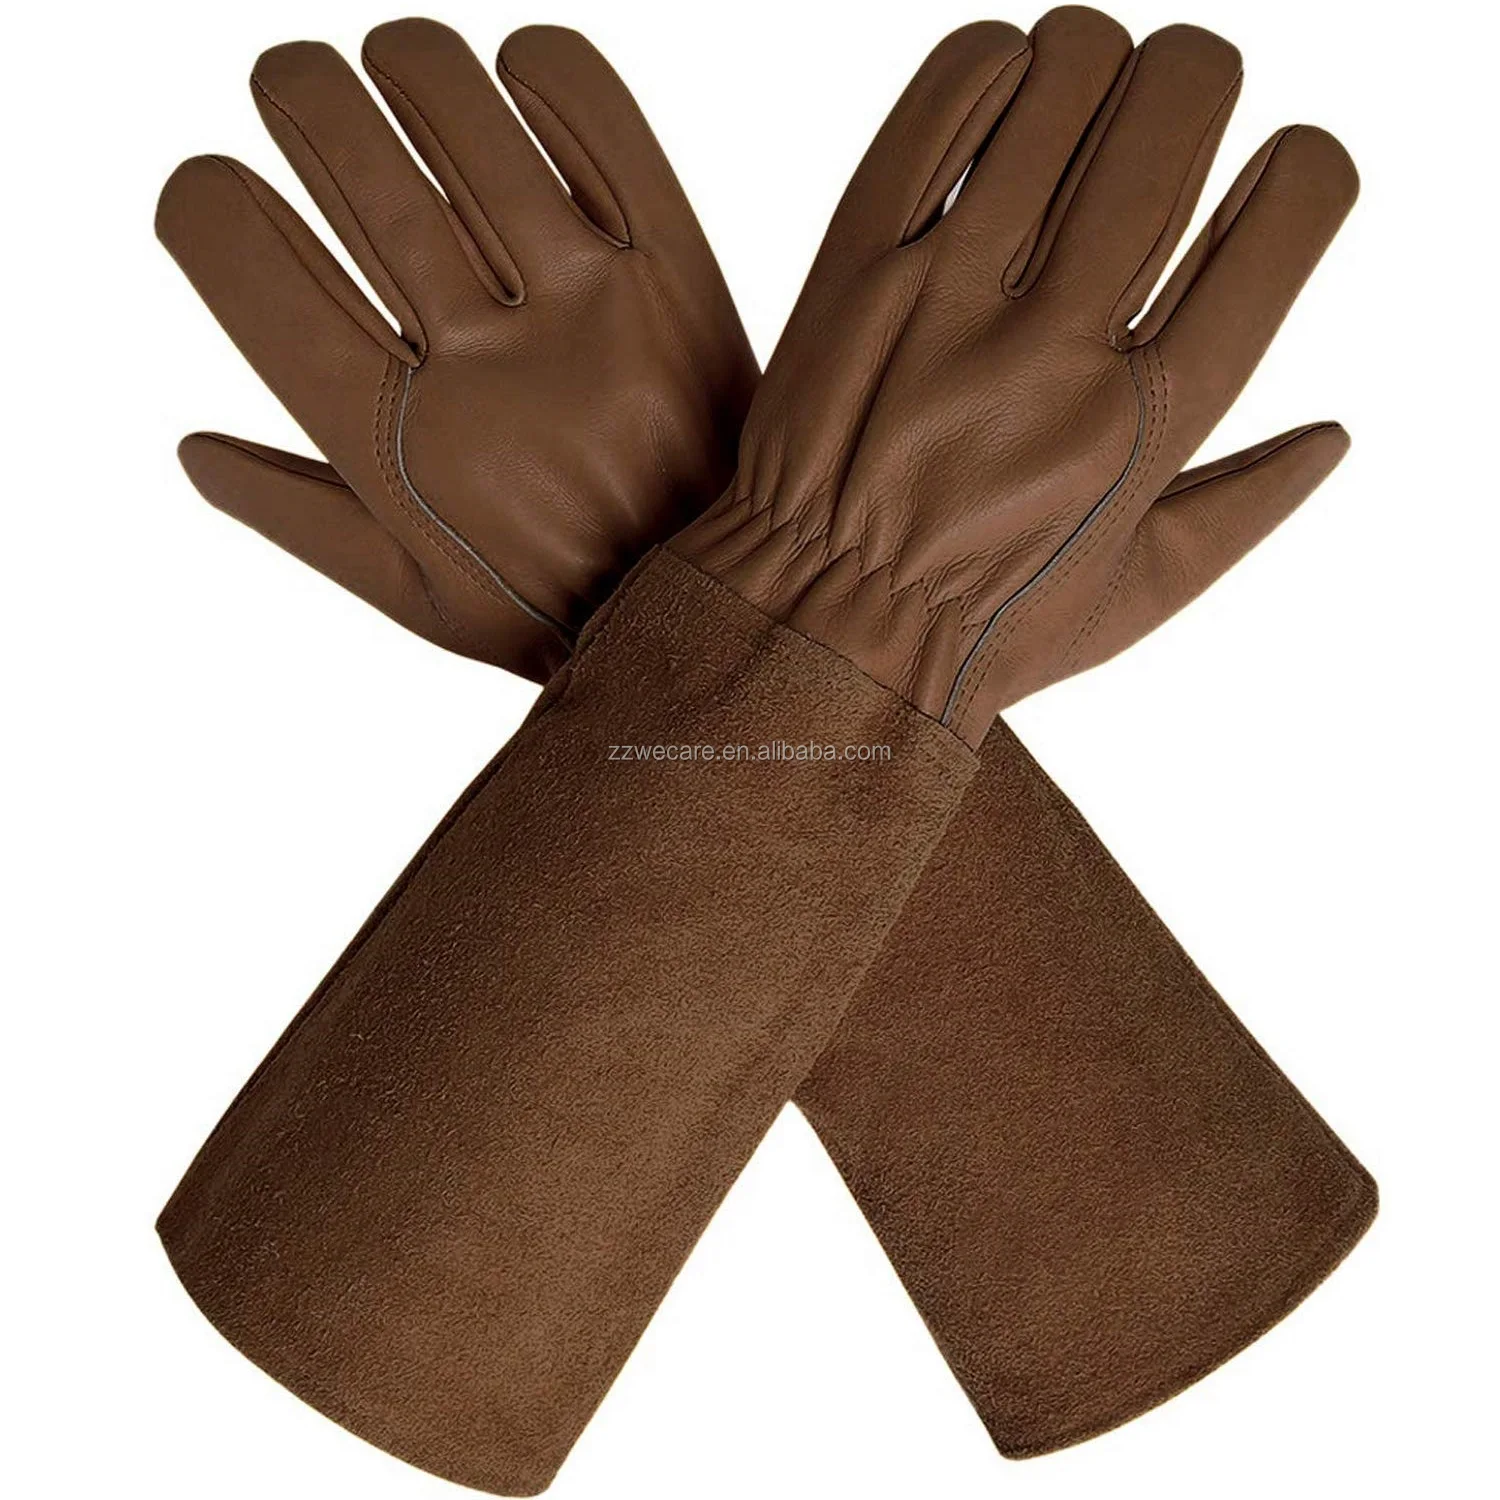 Premium Thorn Proof Gardening Gloves with Long Gauntlet Sleeves for Men & Women 